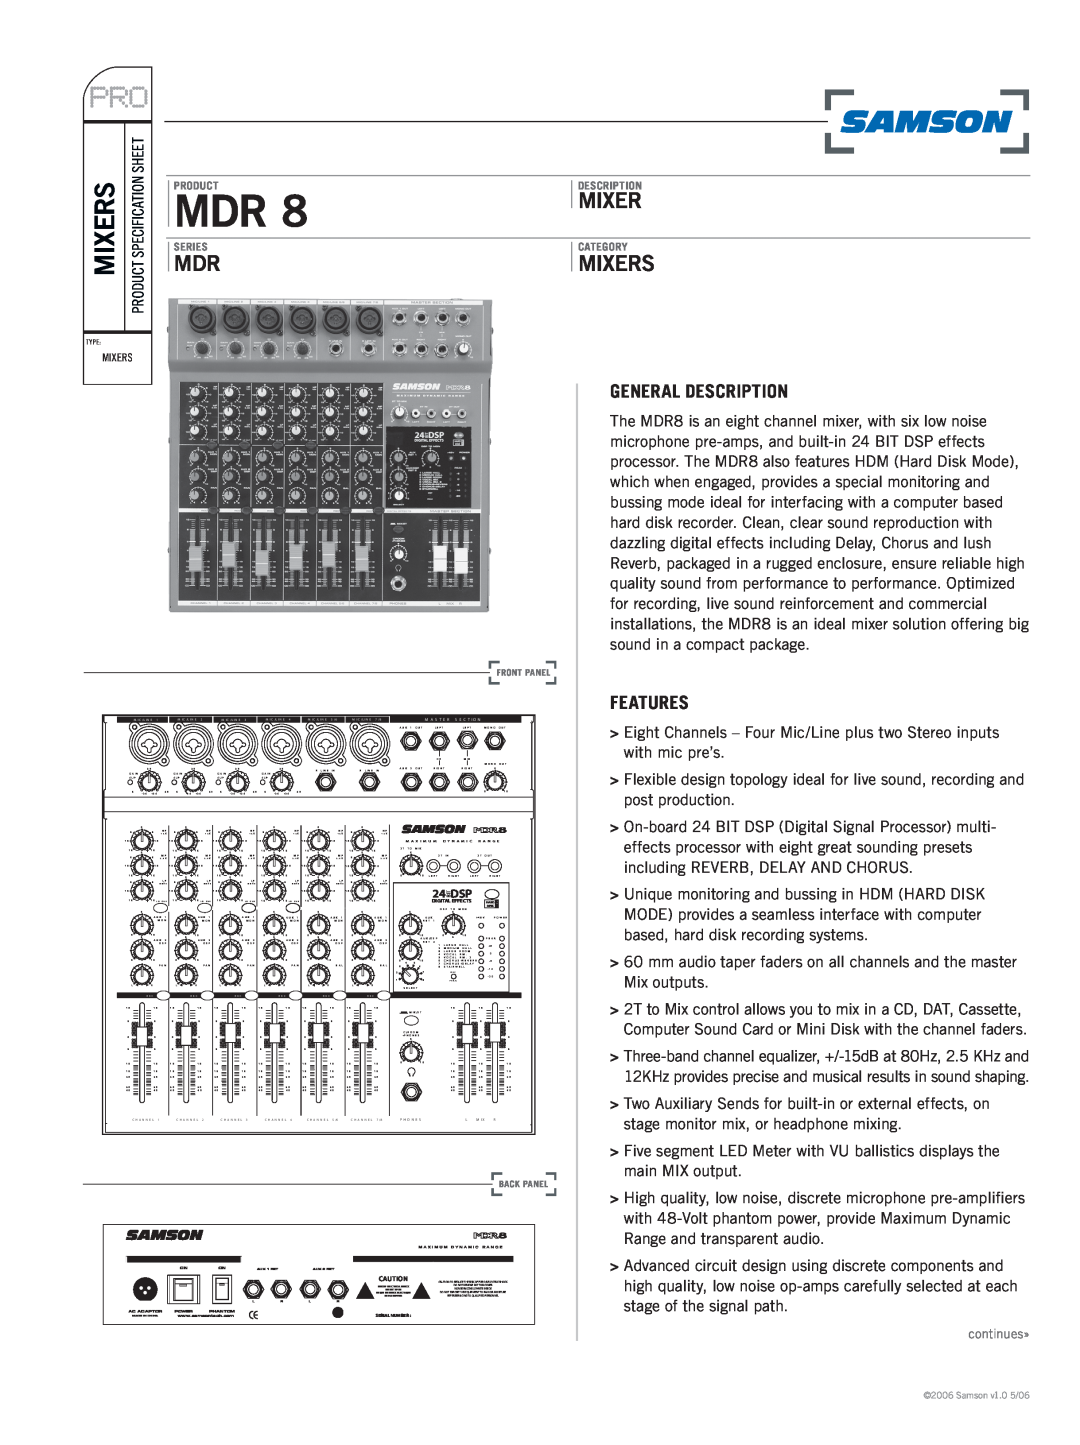 Samson MDR series specifications General Description, Features, Mixers 